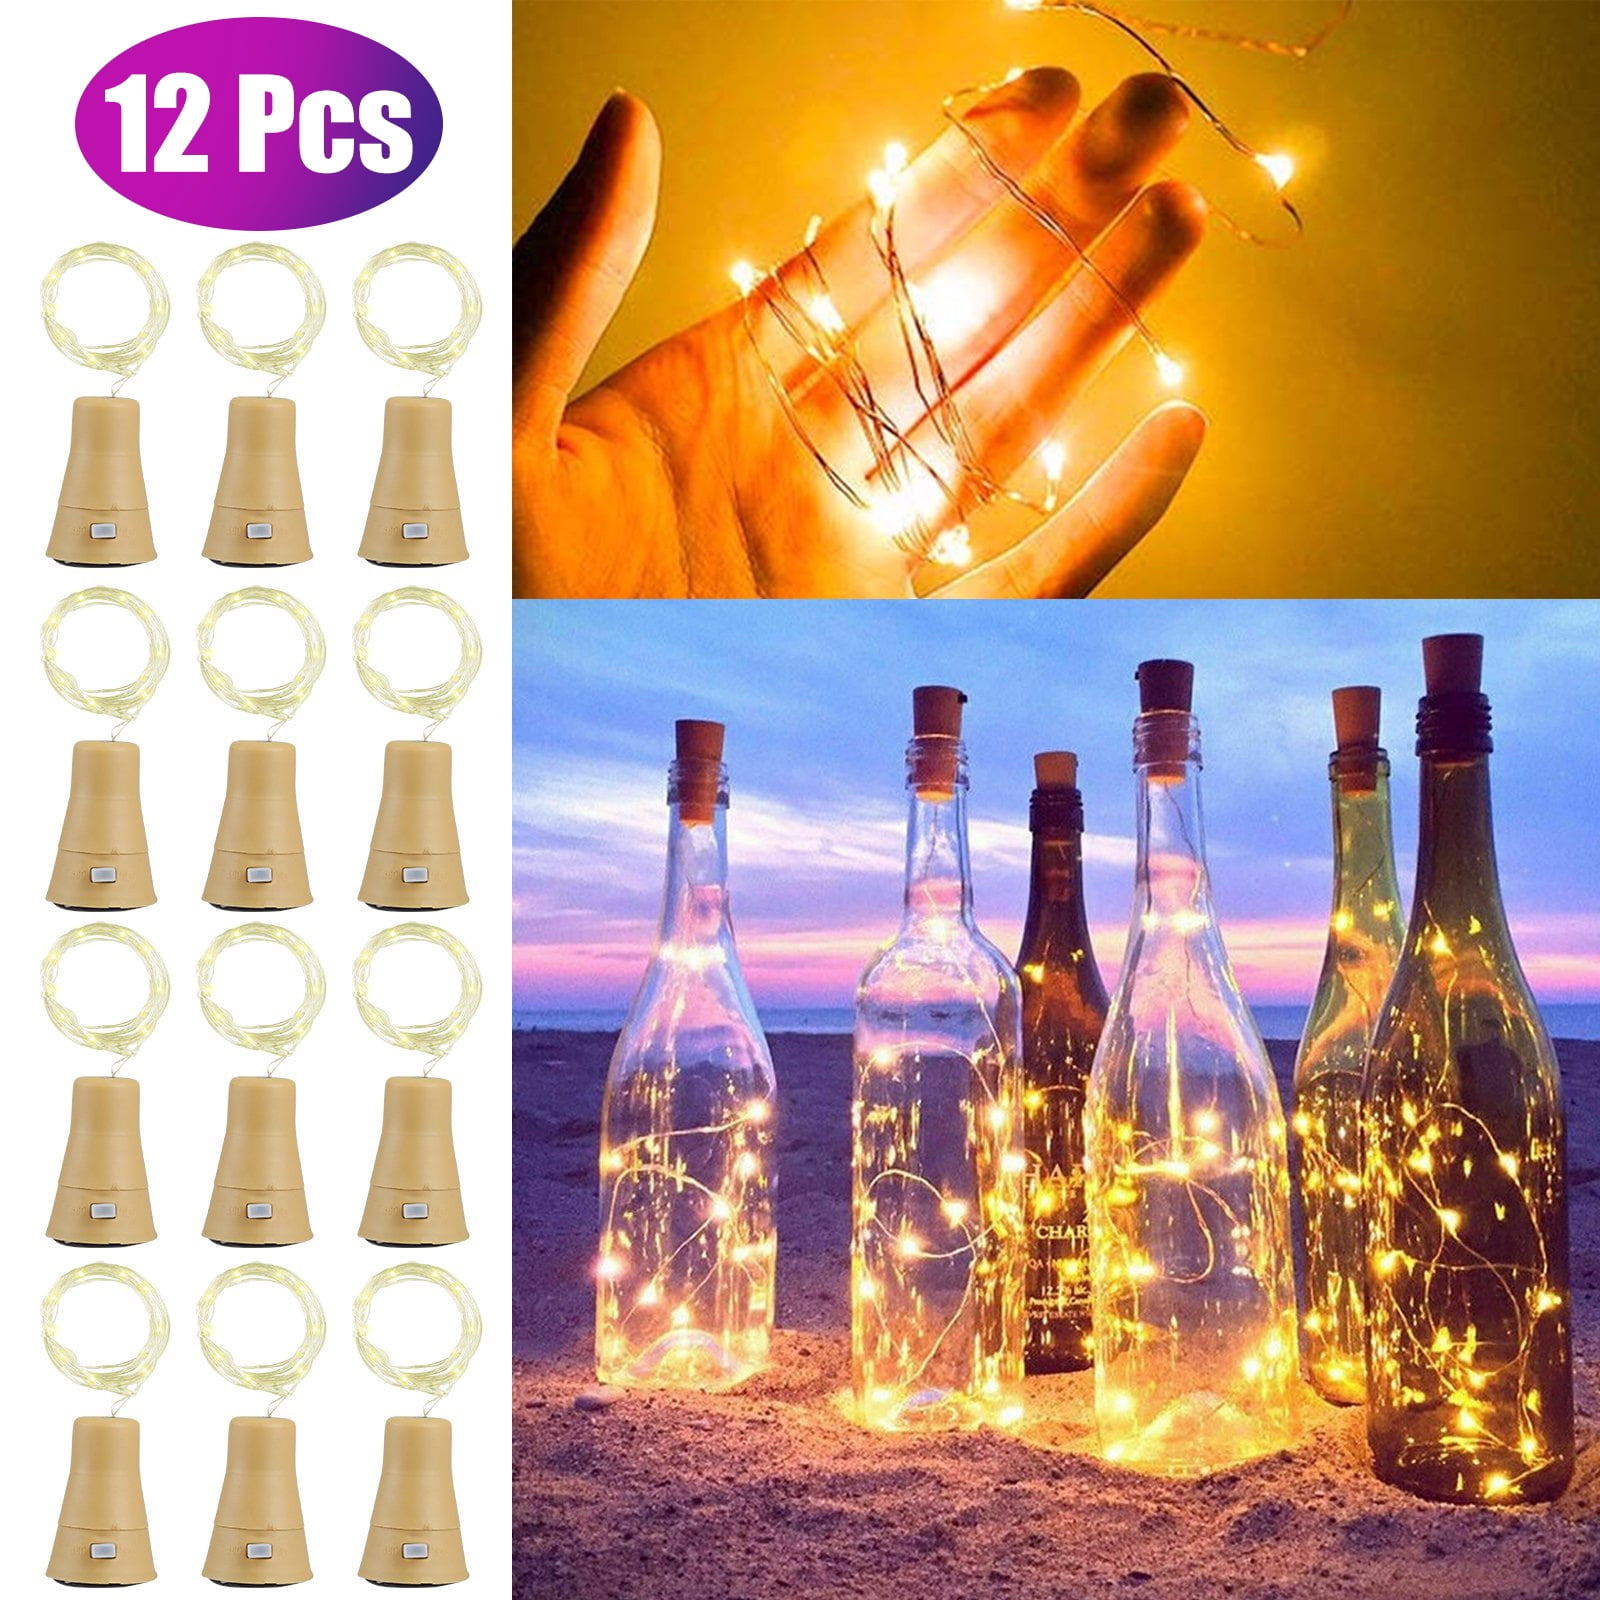 Bottle Stopper Fairy Lights For Wedding 6pcs 2M 20 LED Cork Lights on a String 